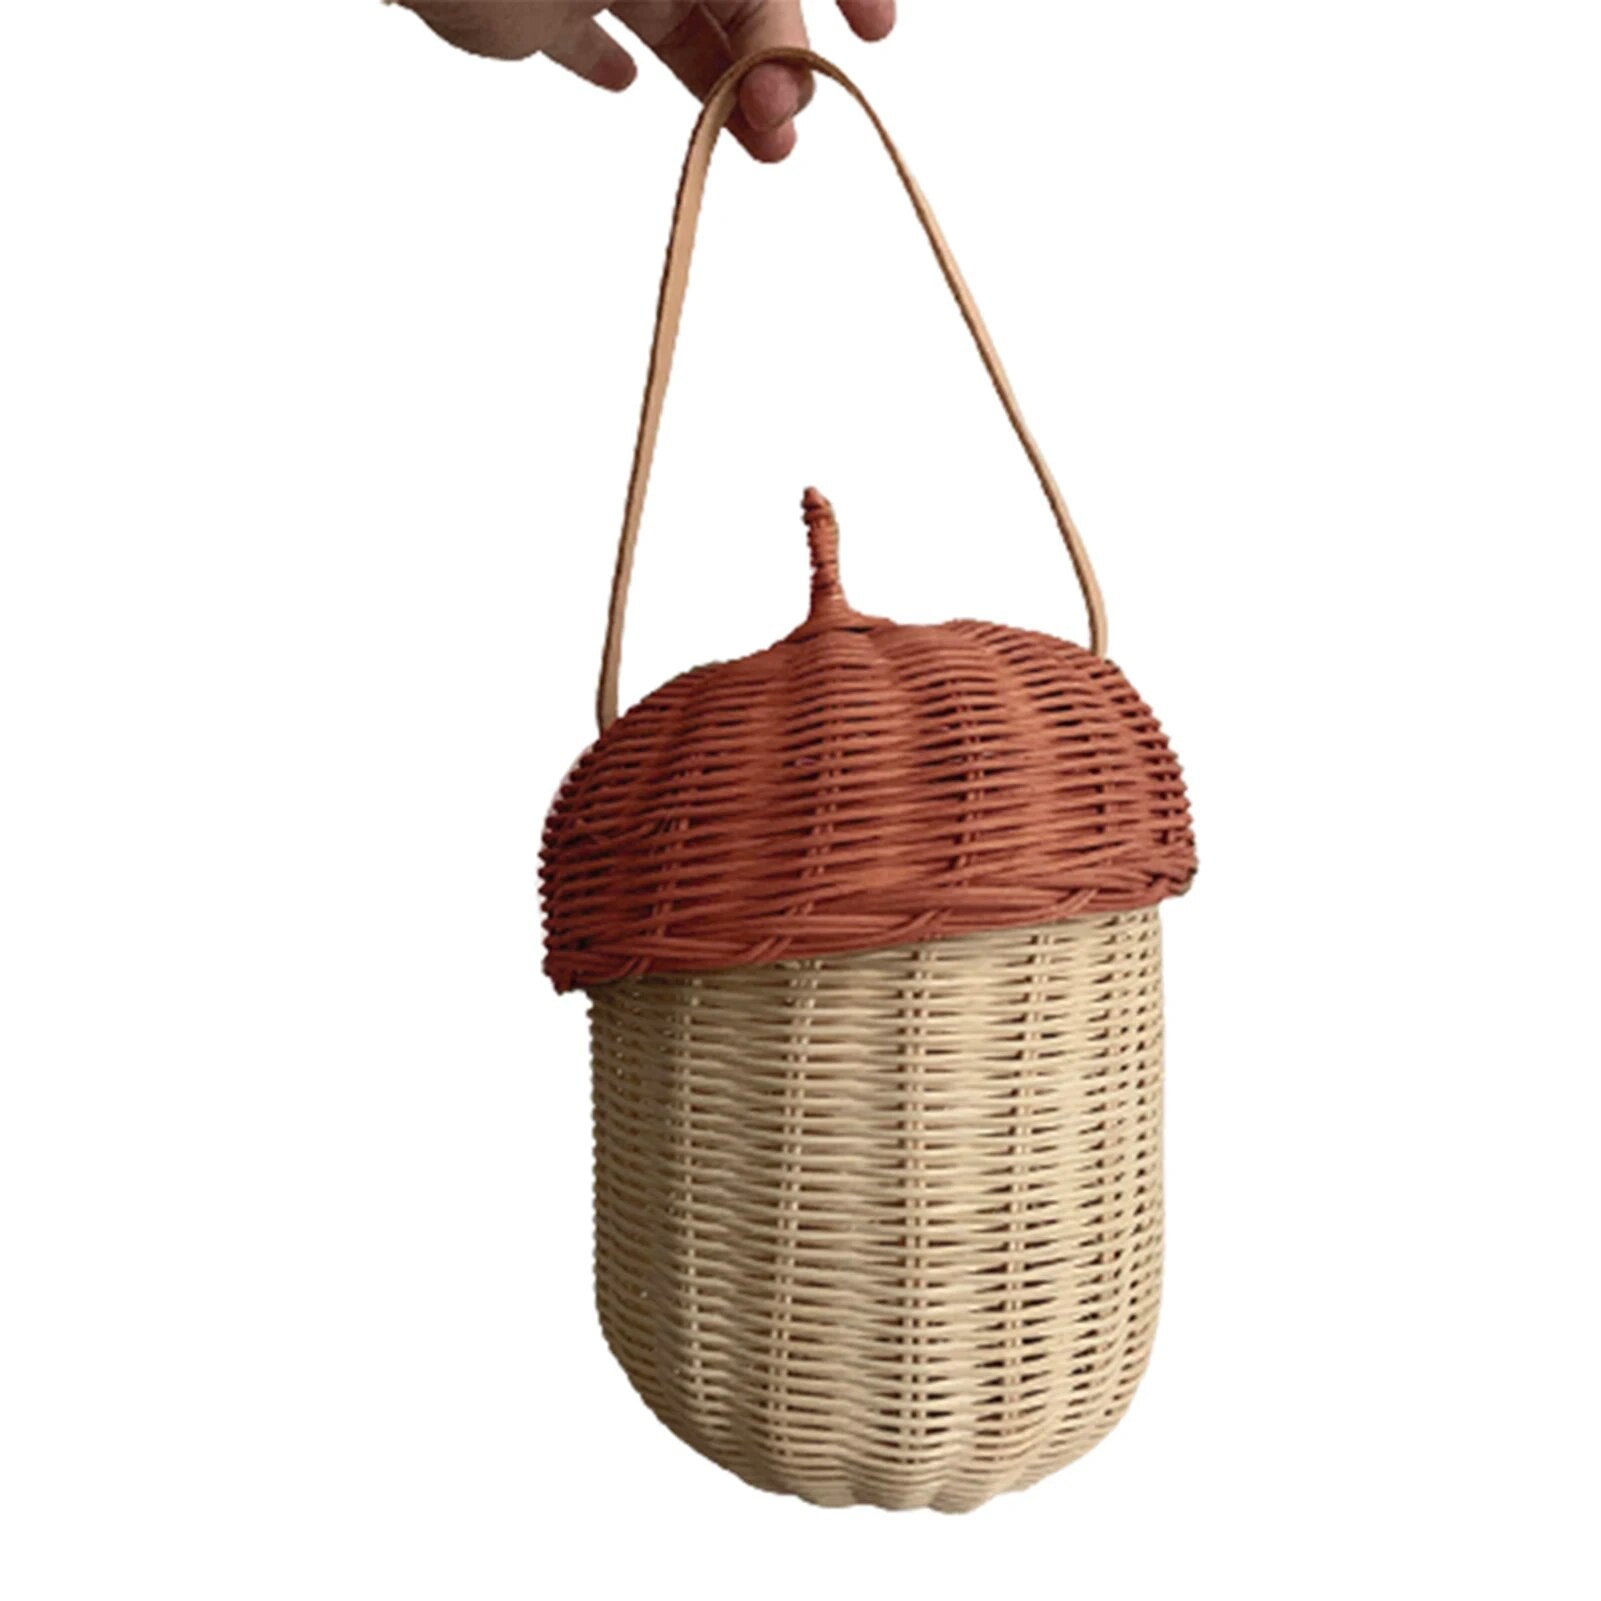 Rattan Pinecone Picnic Basket Handmade Woven Storage Bag Cute